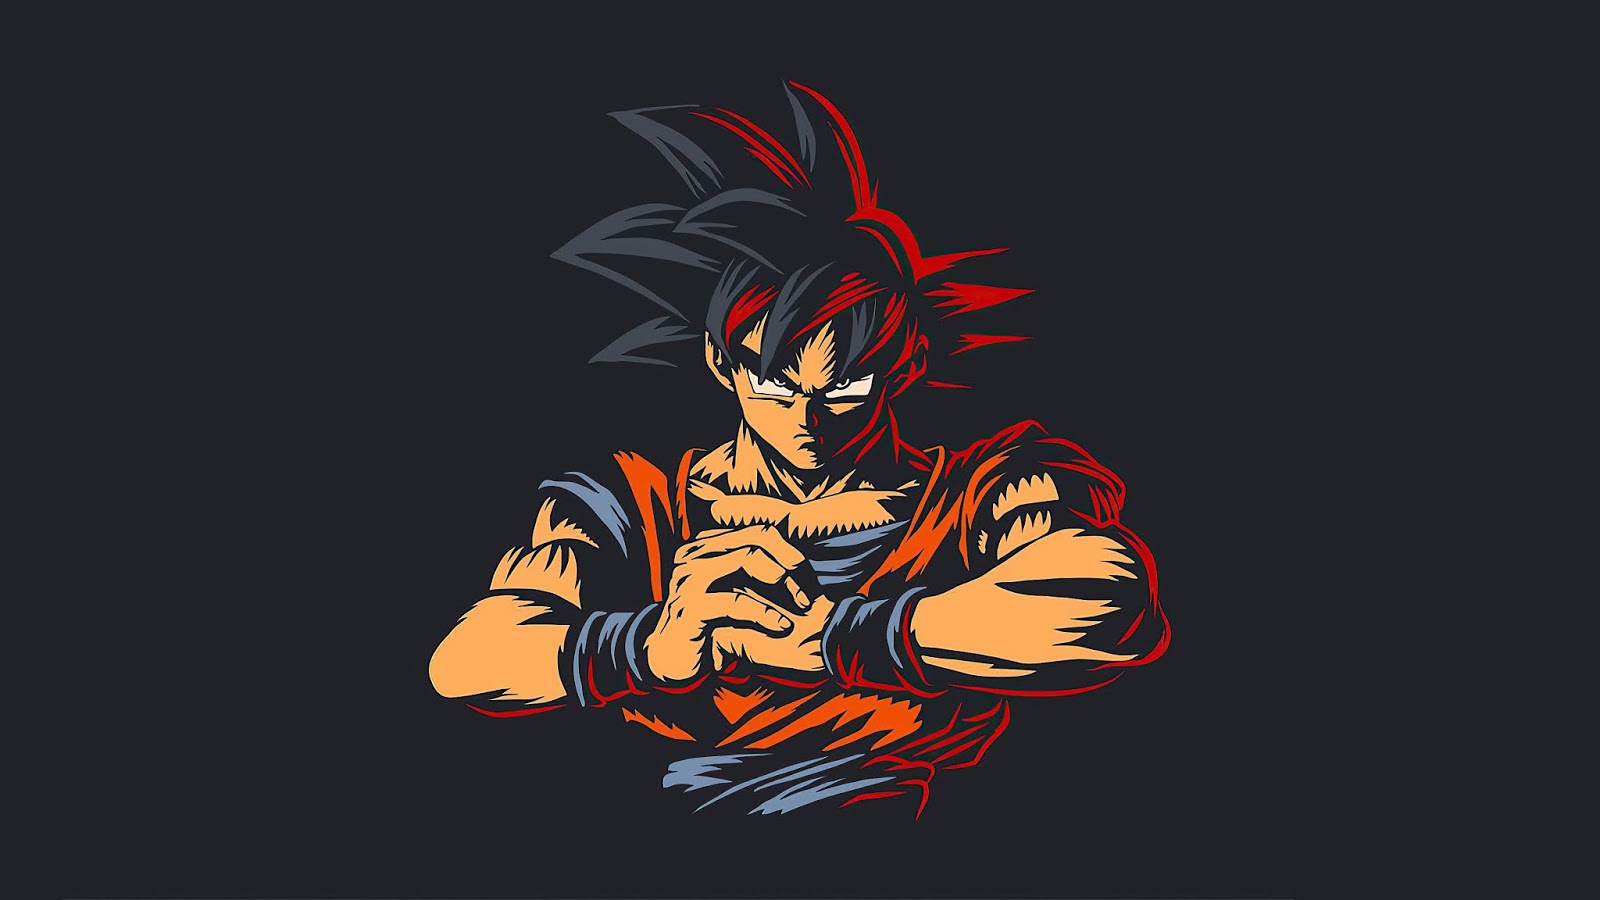 Goku Dragon Ball Z iphone Wallpaper